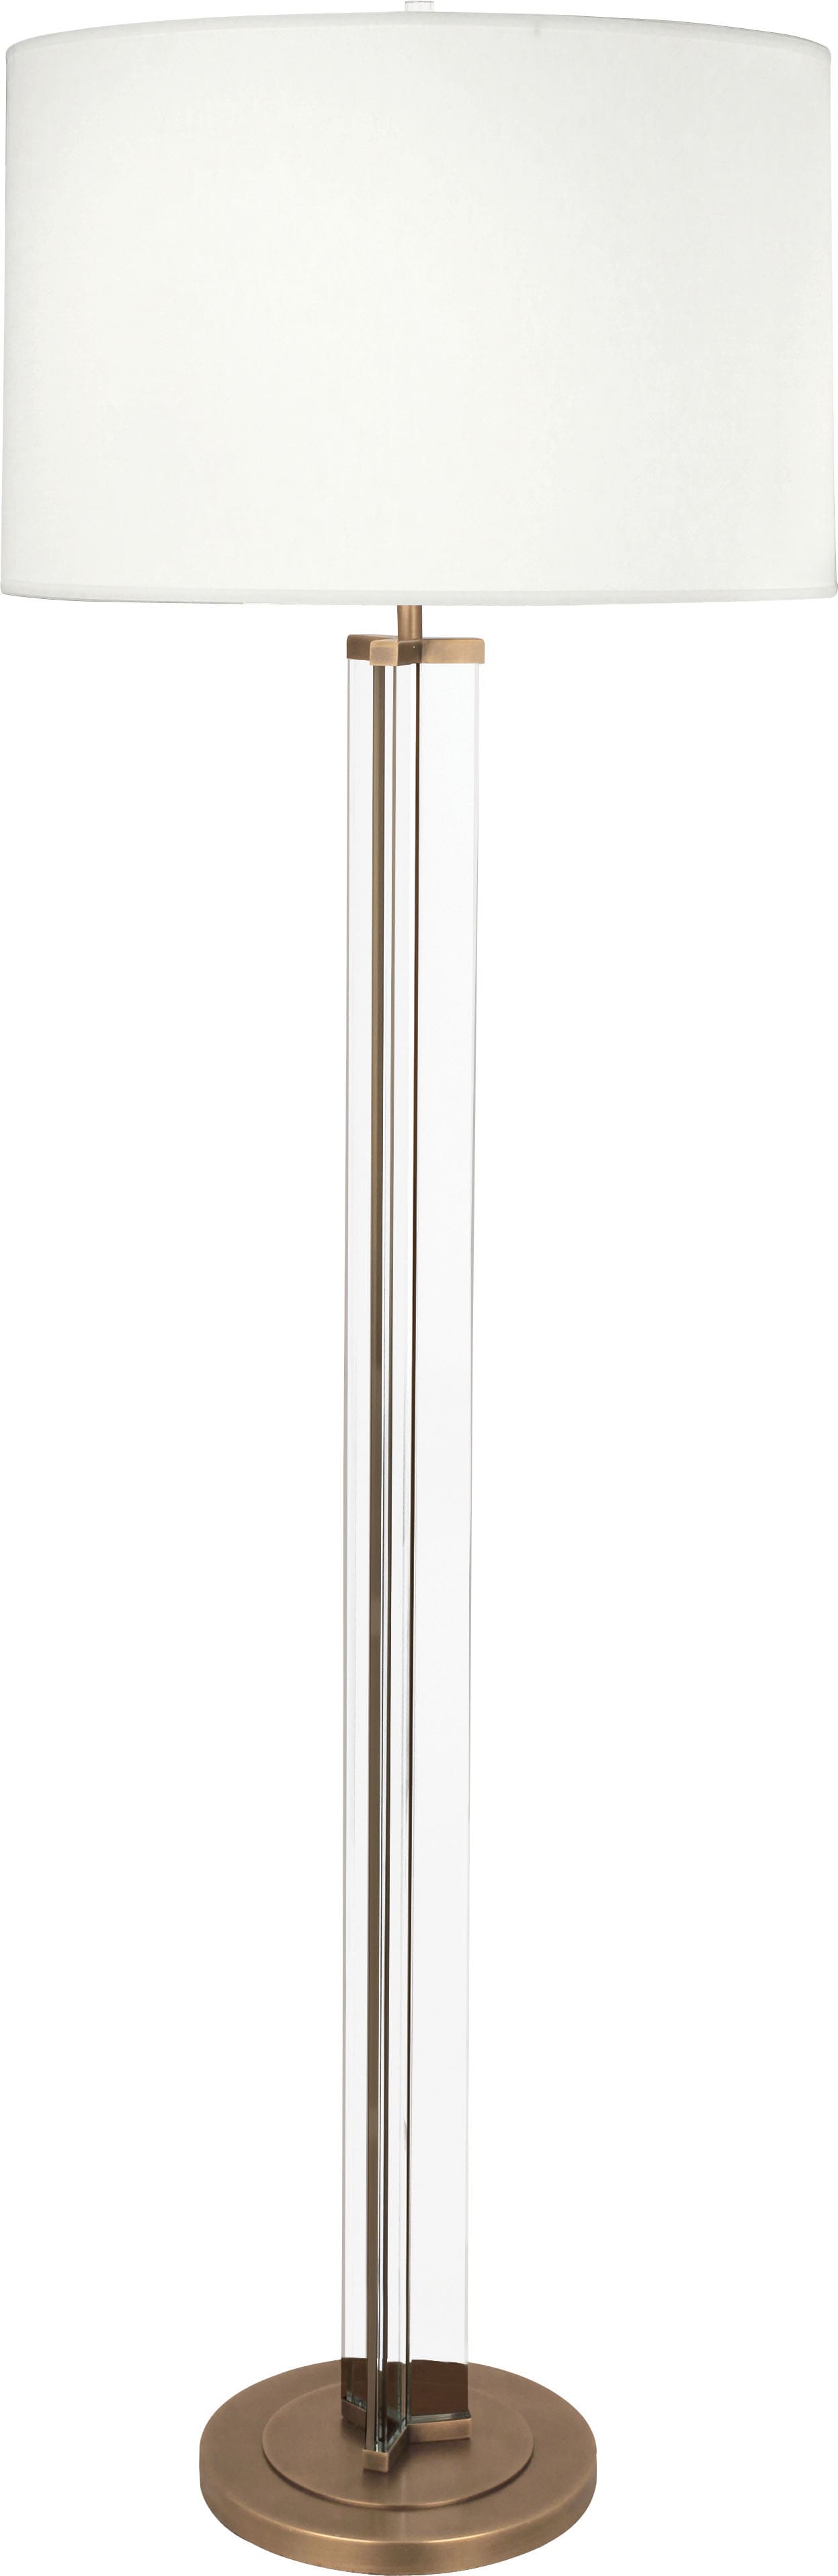 Aged Brass Fineas 66 Column Floor Lamp, Column Floor Lamp Shade